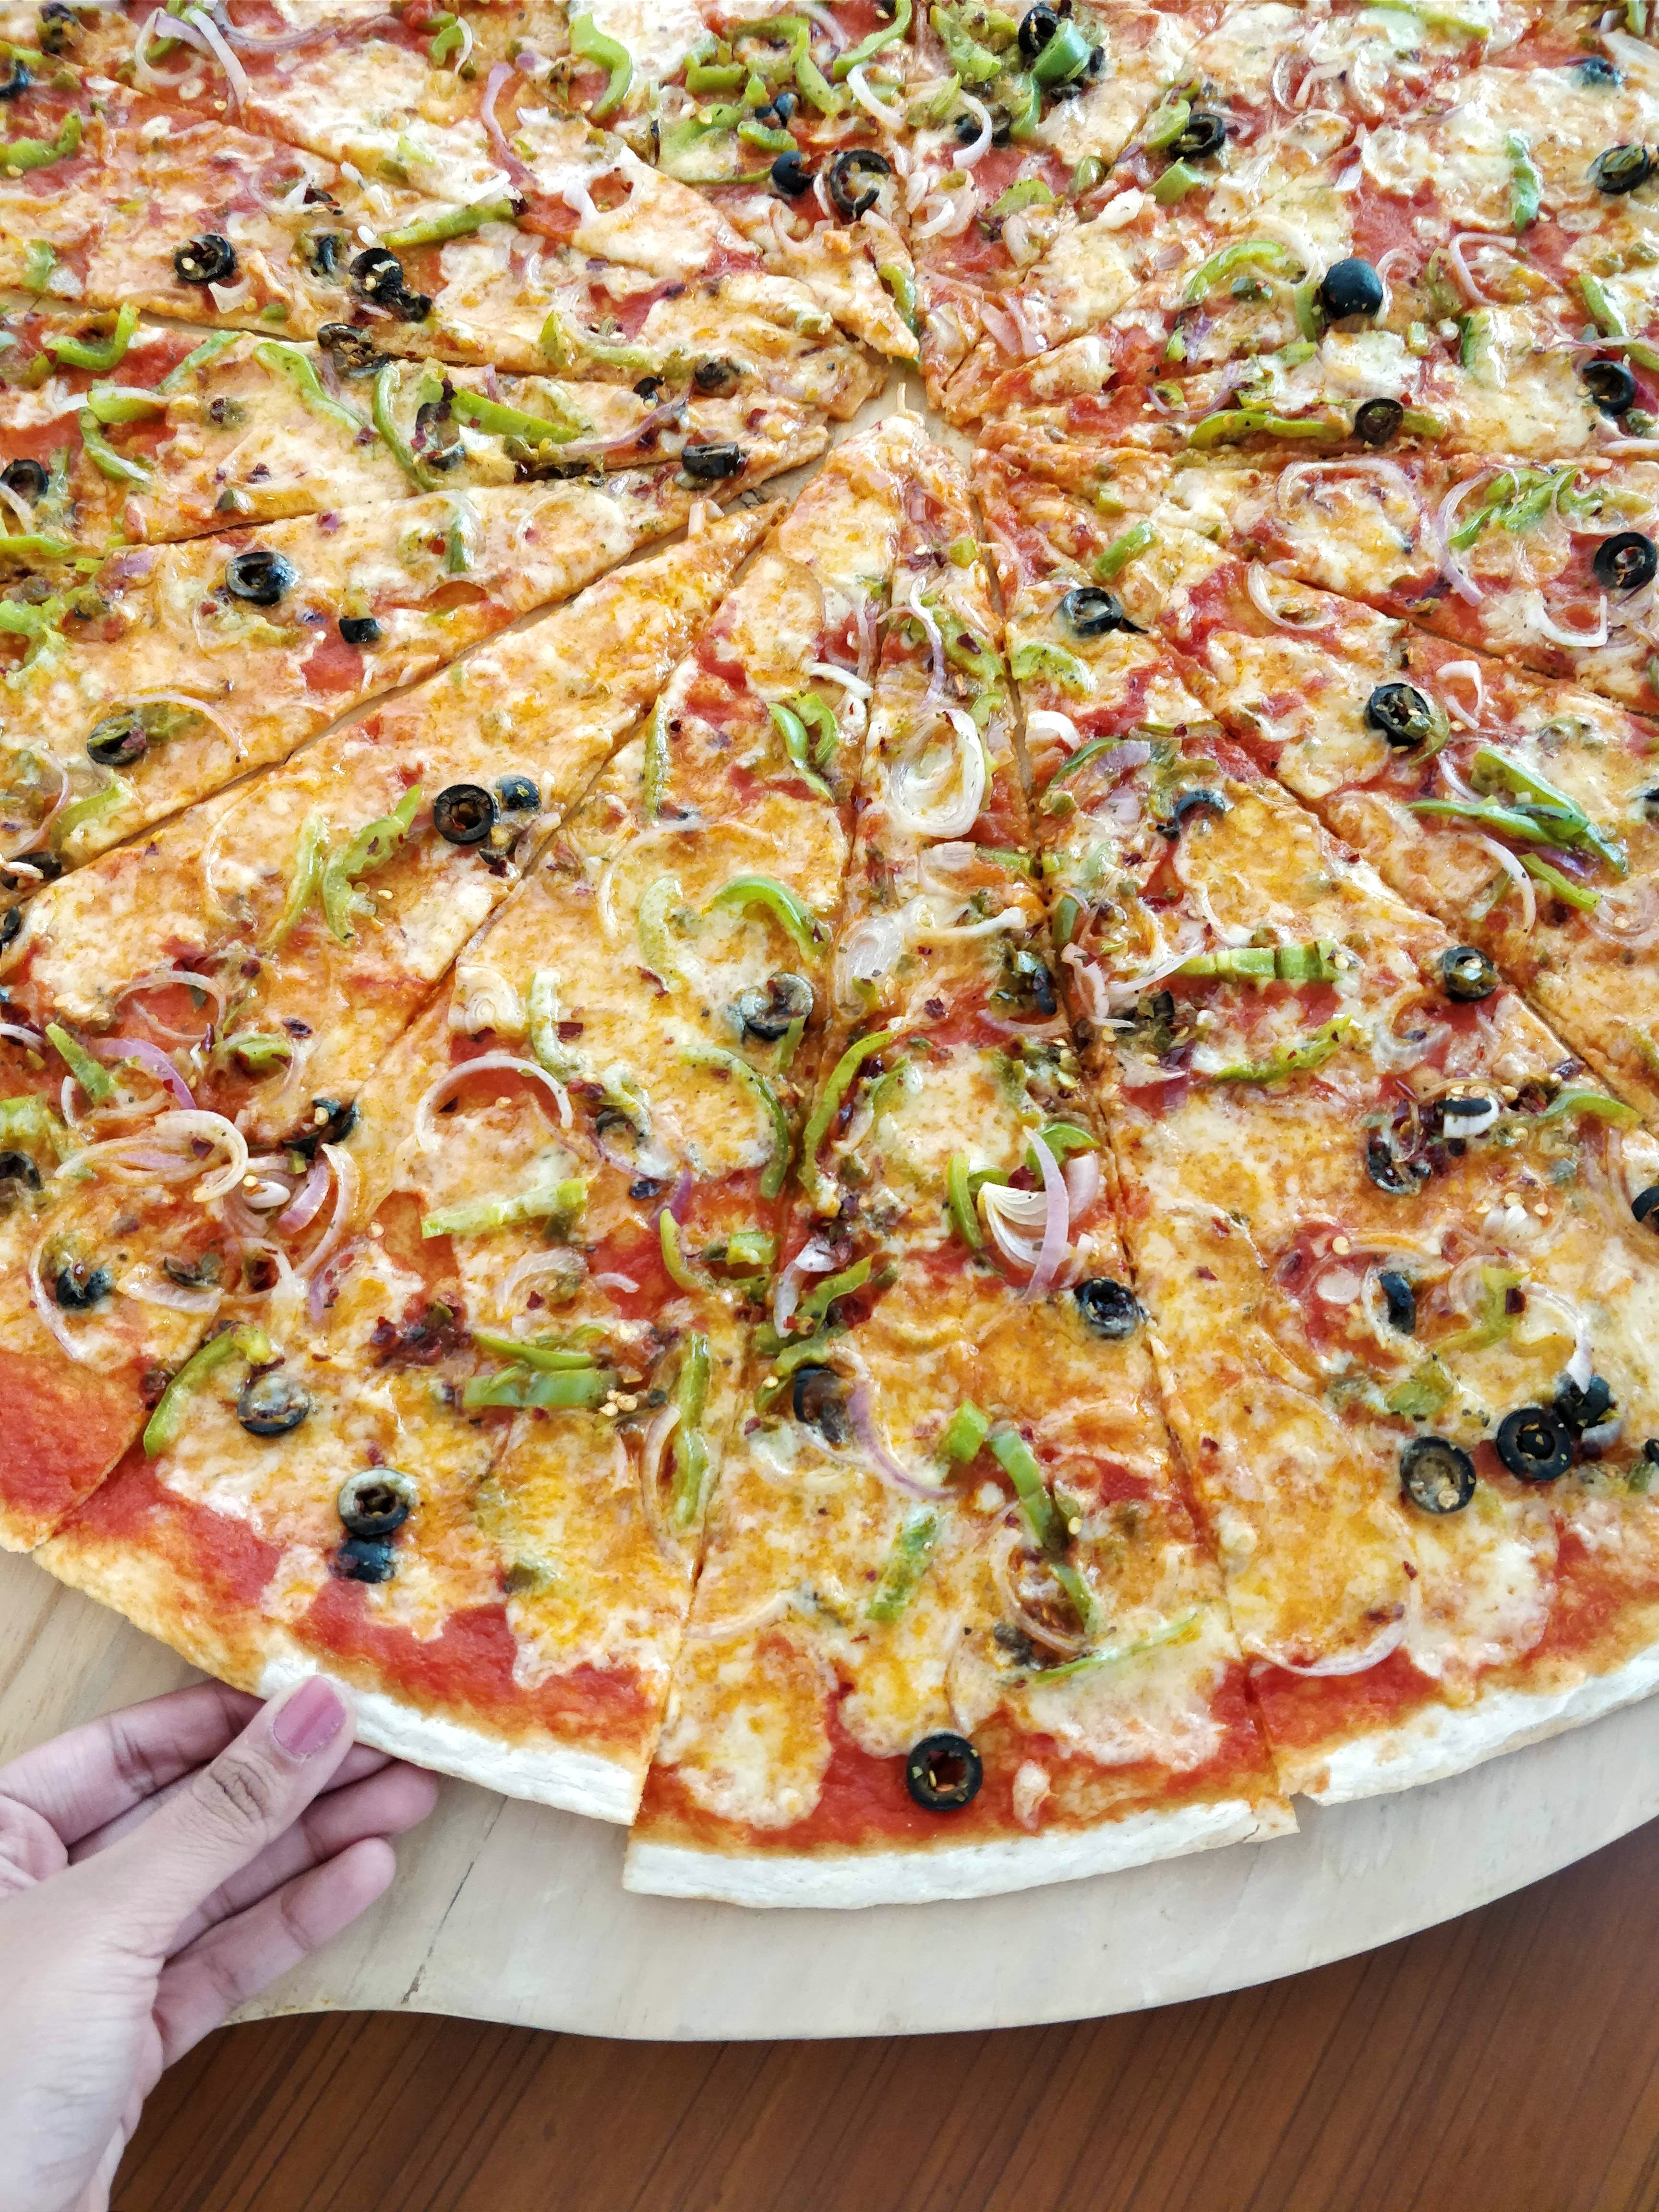 Dish,Food,Cuisine,Pizza cheese,Pizza,California-style pizza,Ingredient,Tarte flambée,Flatbread,Junk food